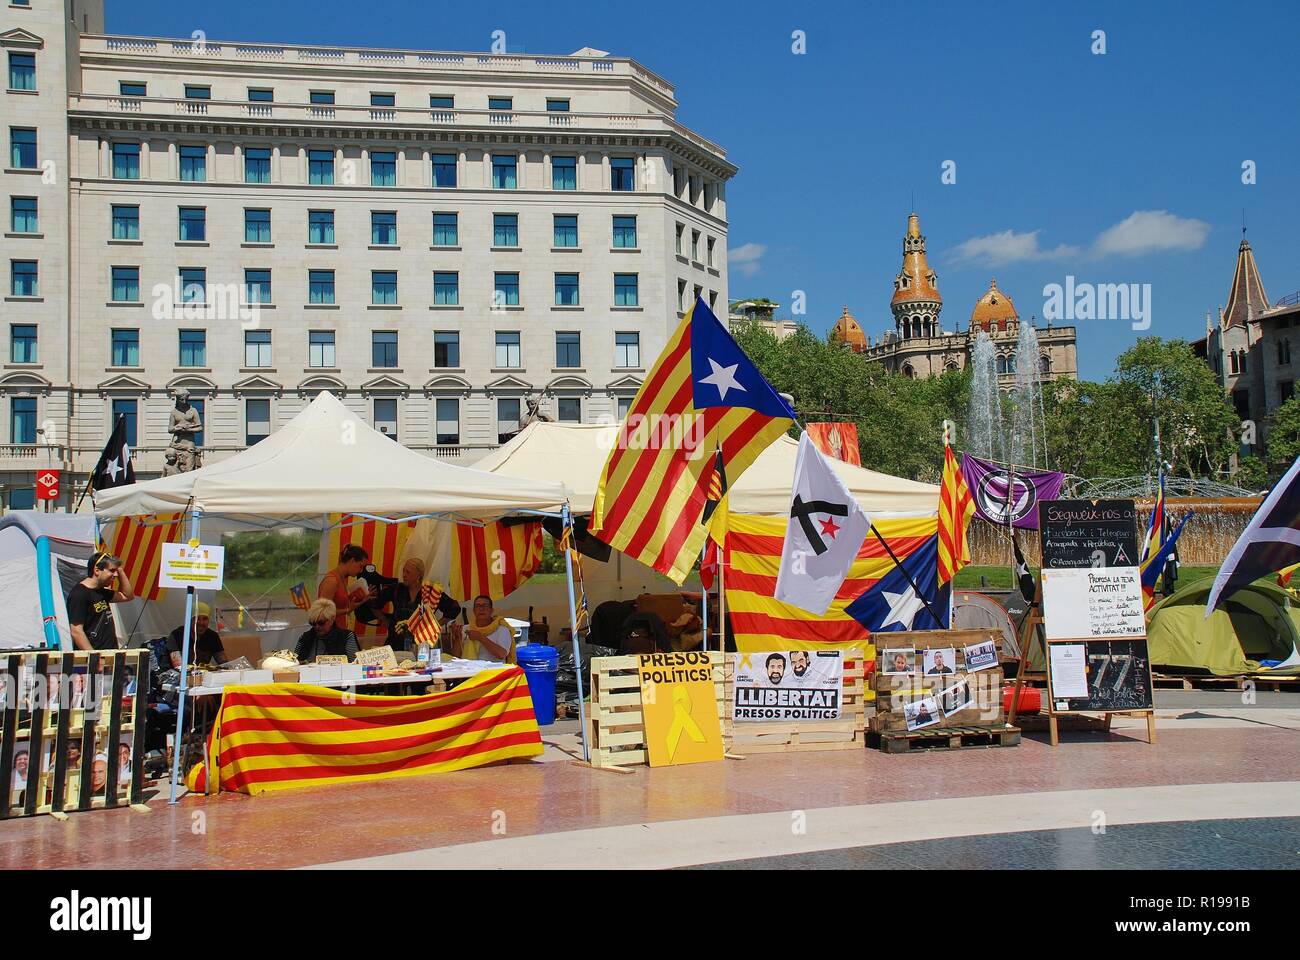 Campaigners for the Llibertat Presos Politics (Free Political Prisoners) movement campaign in Placa Catalunya in Barcelona, Spain on April 17, 2018. Stock Photo